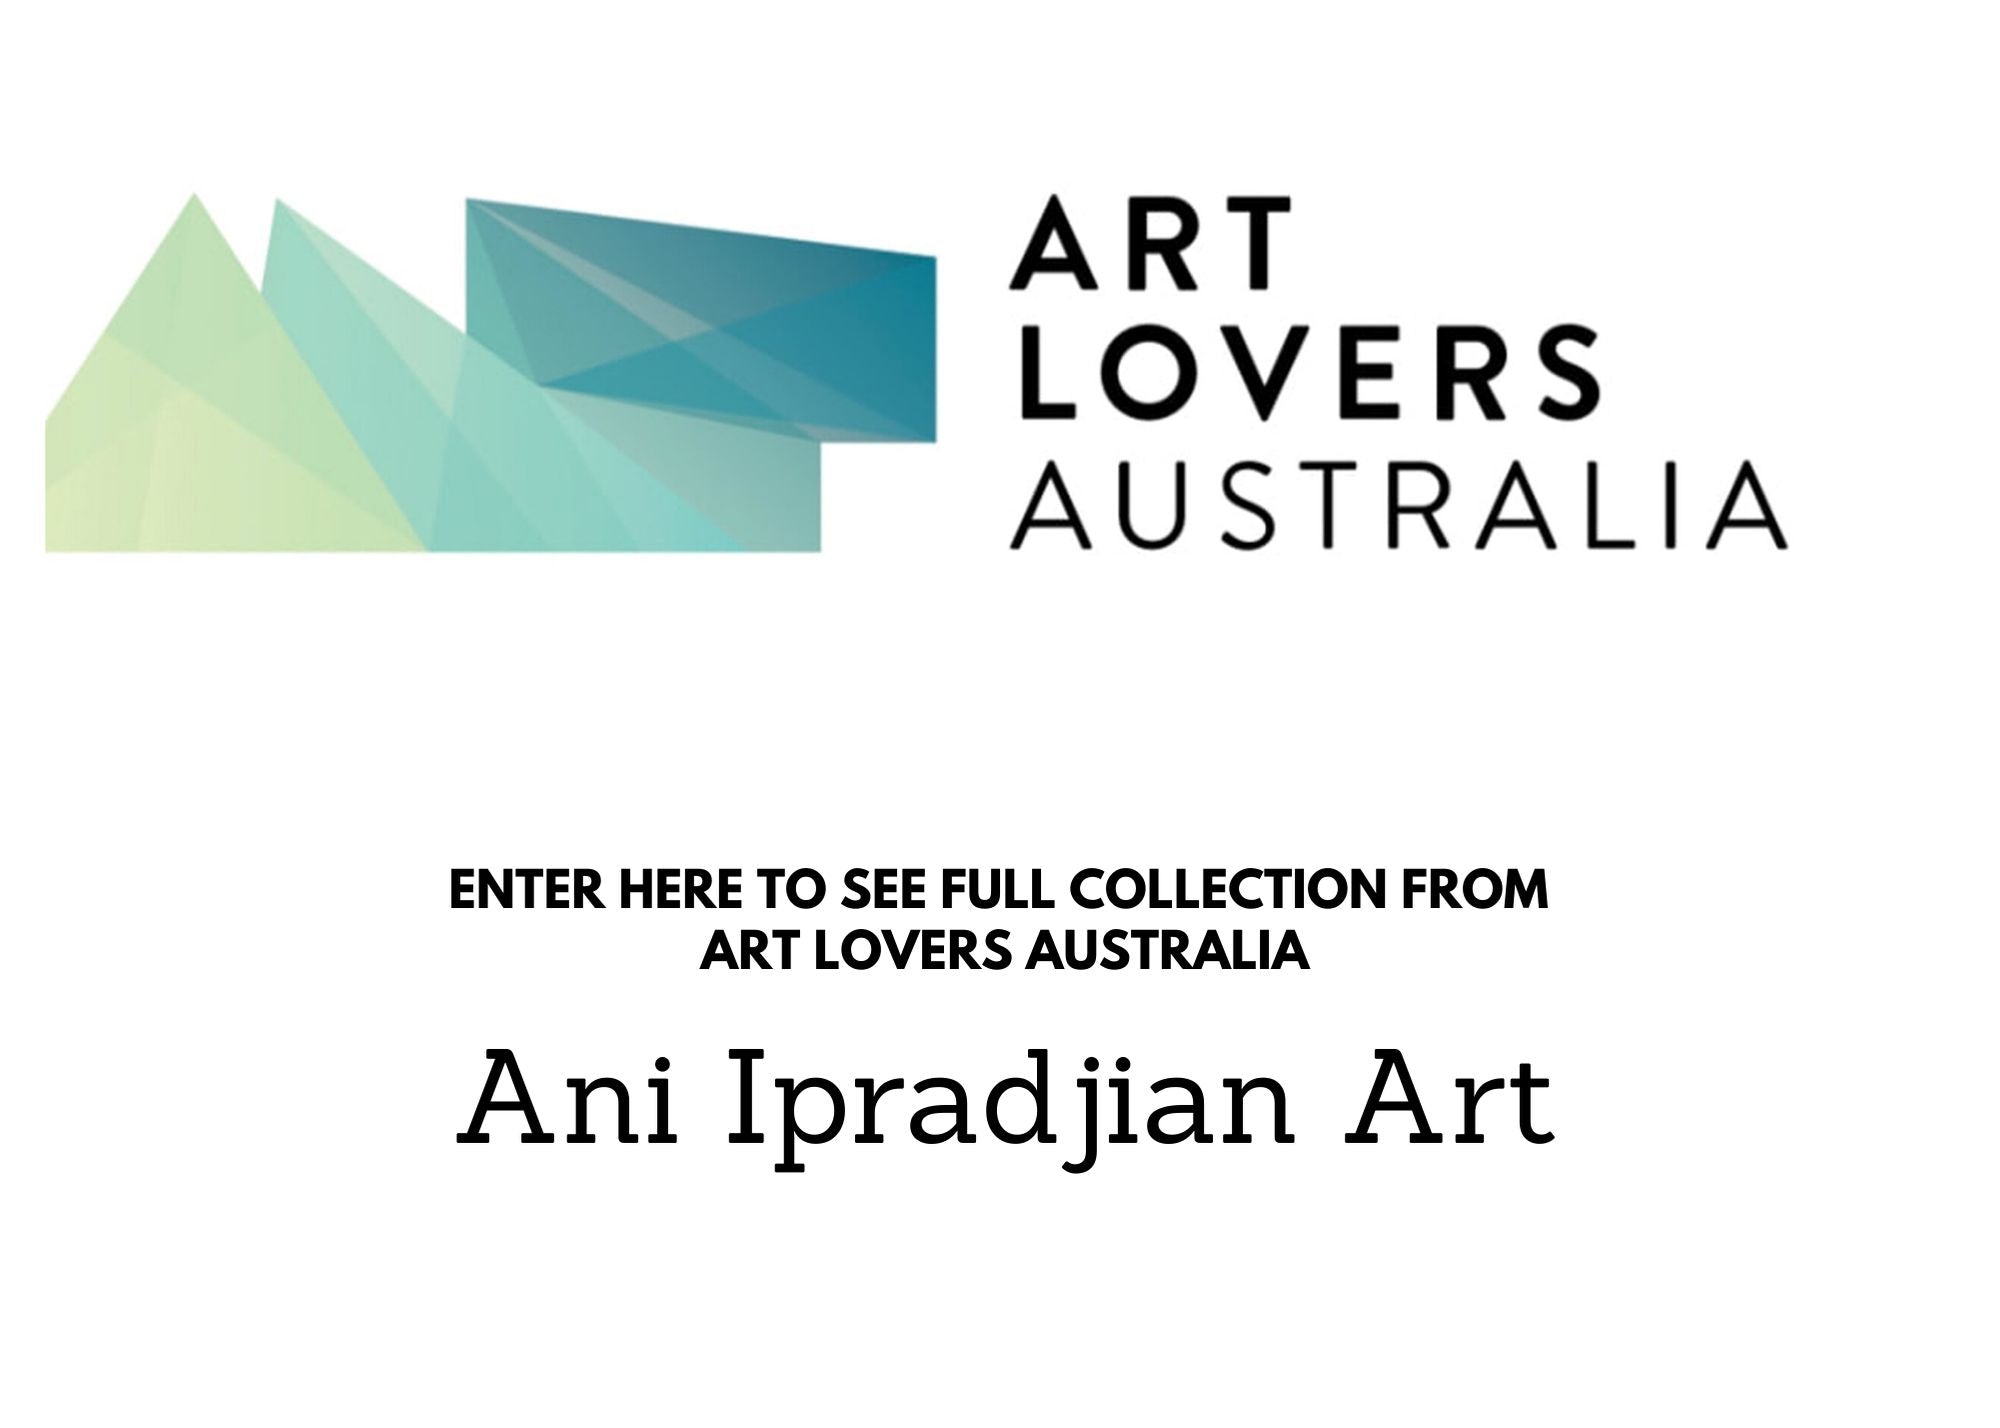 ART LOVERS AUSTRALIA - Ani Ipradjian Art